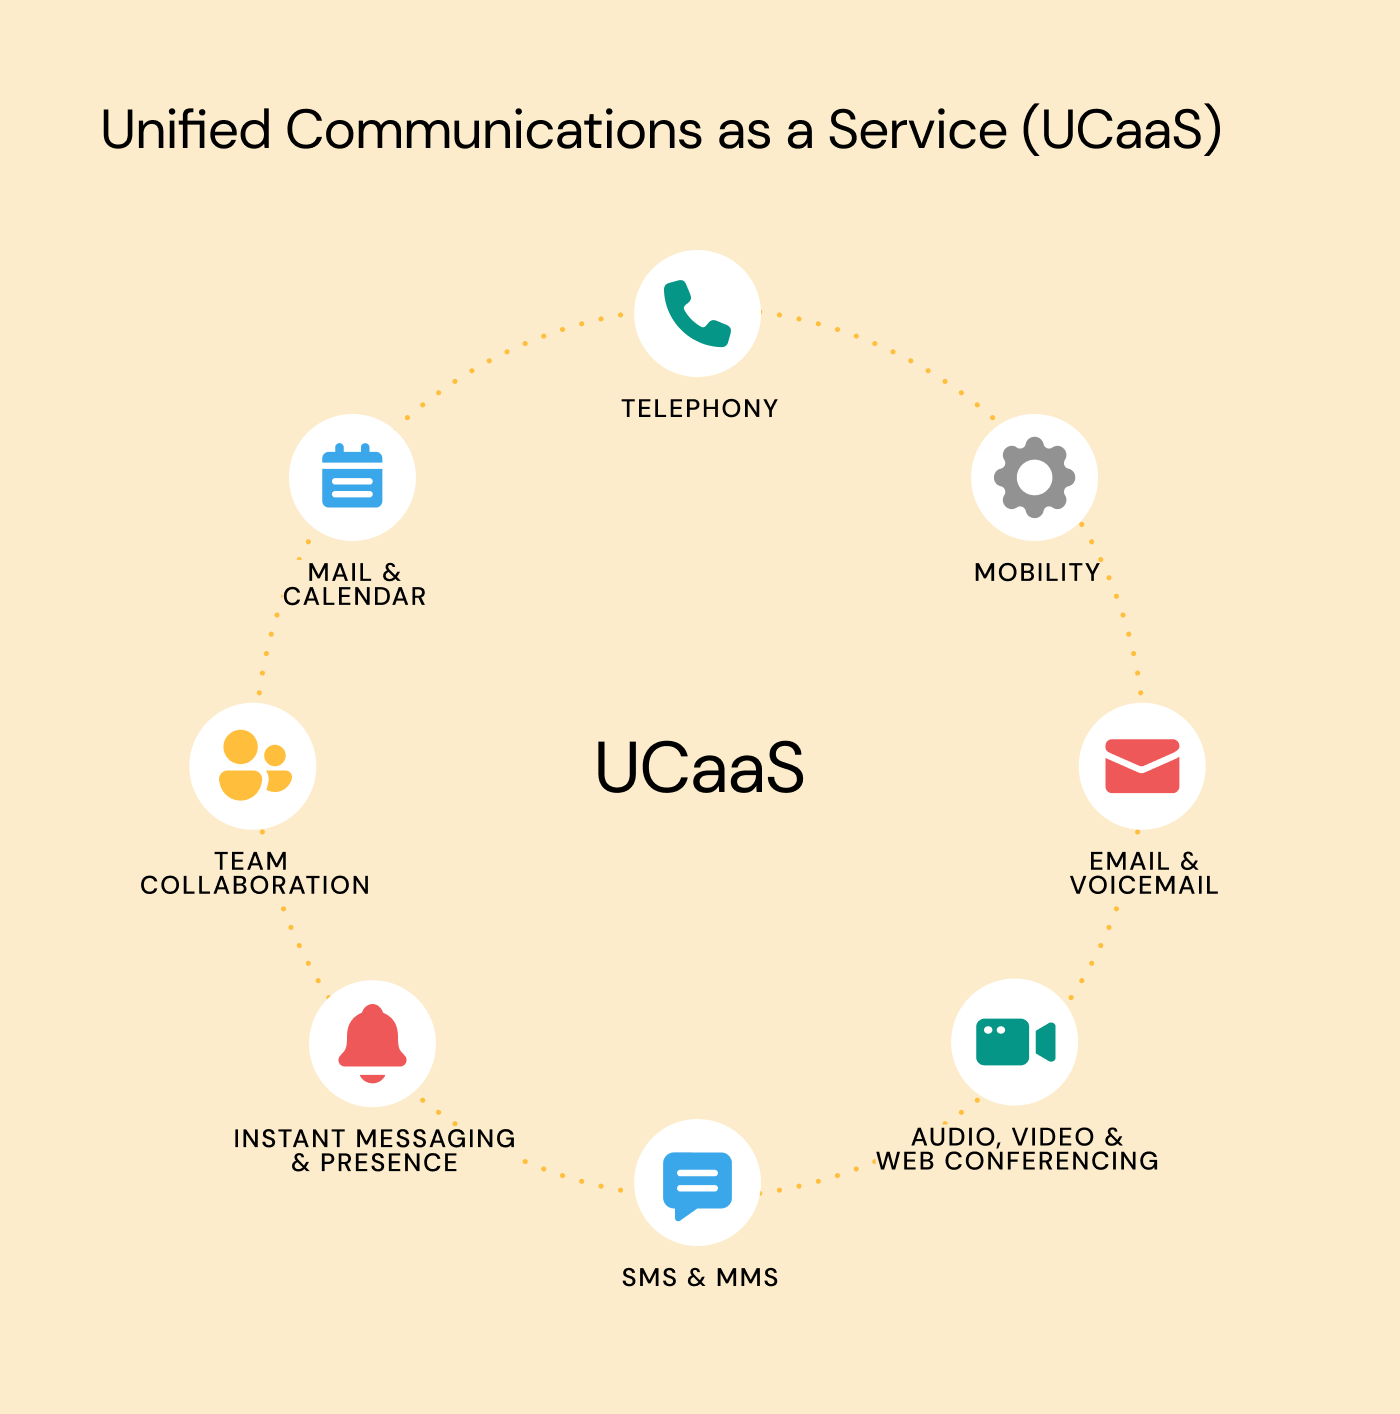 Key features of UCaaS